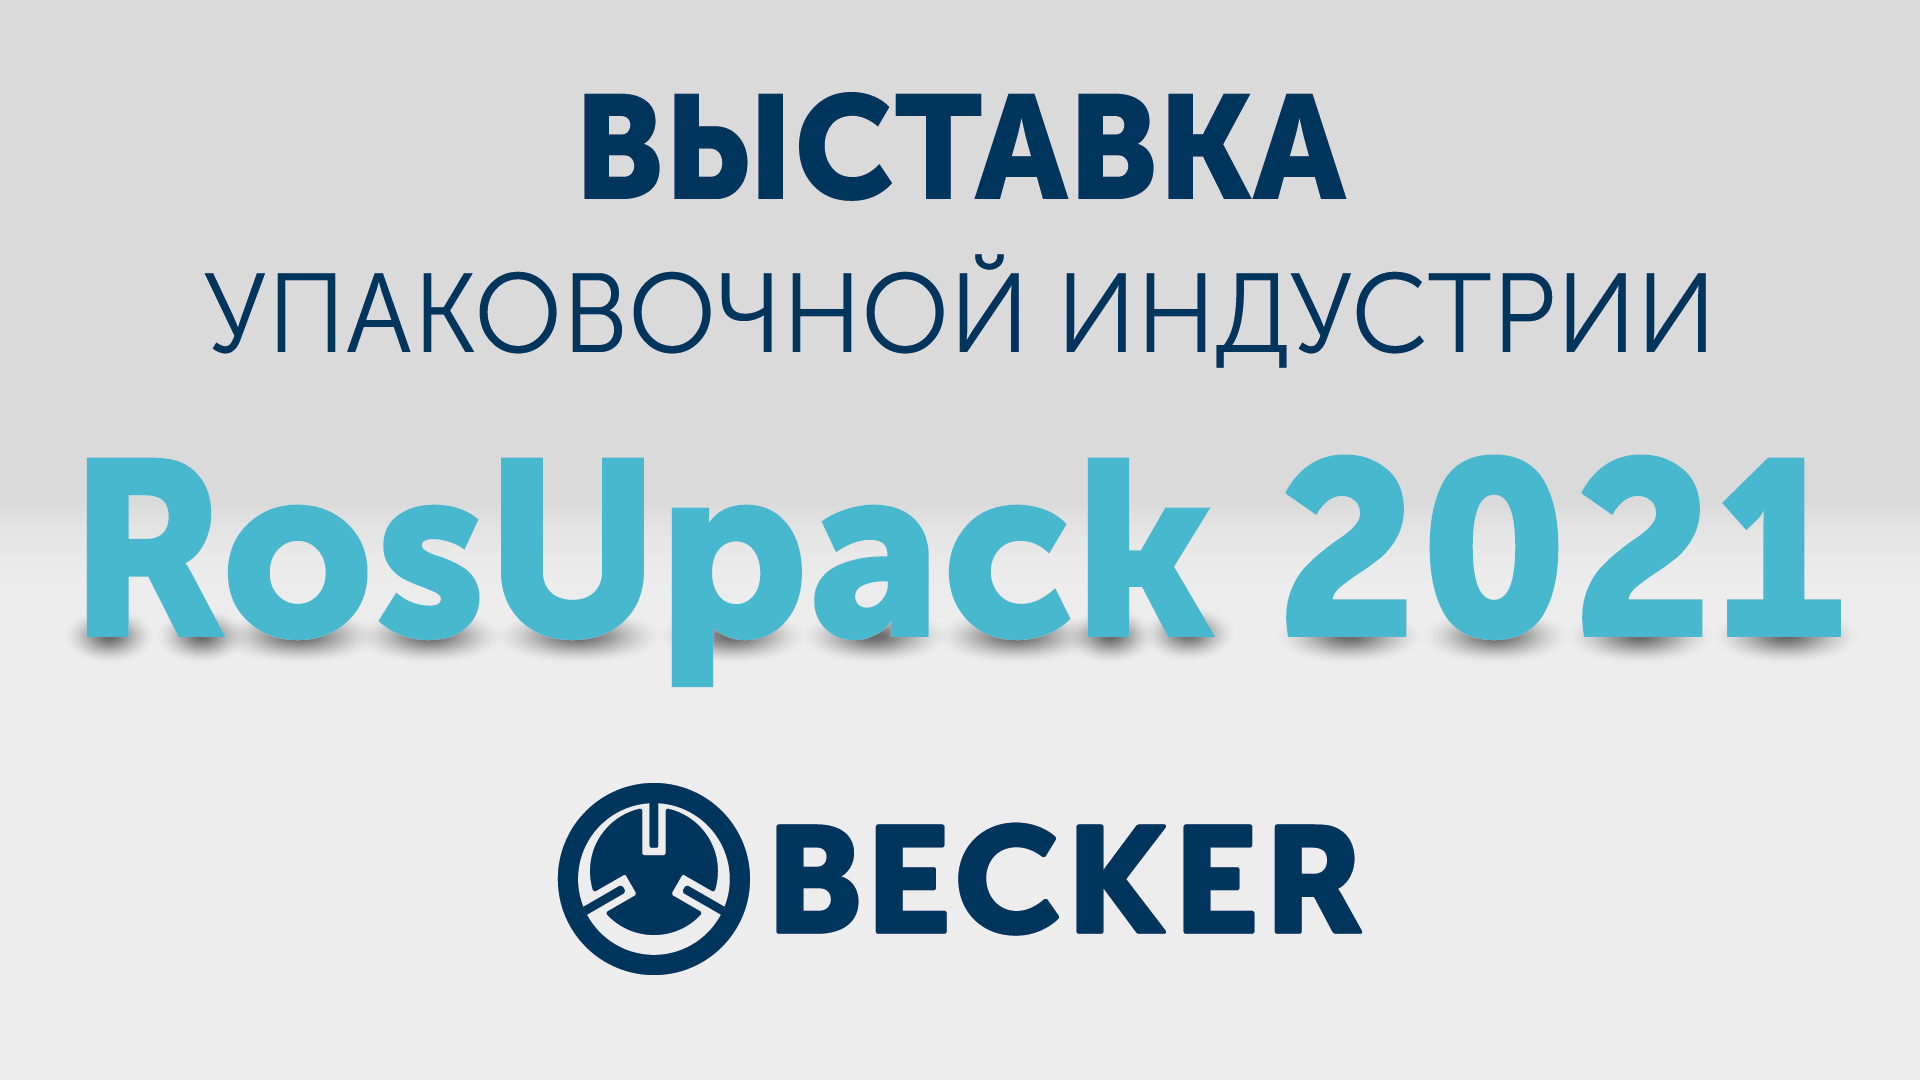 Becker's video report at RosUpack 2021